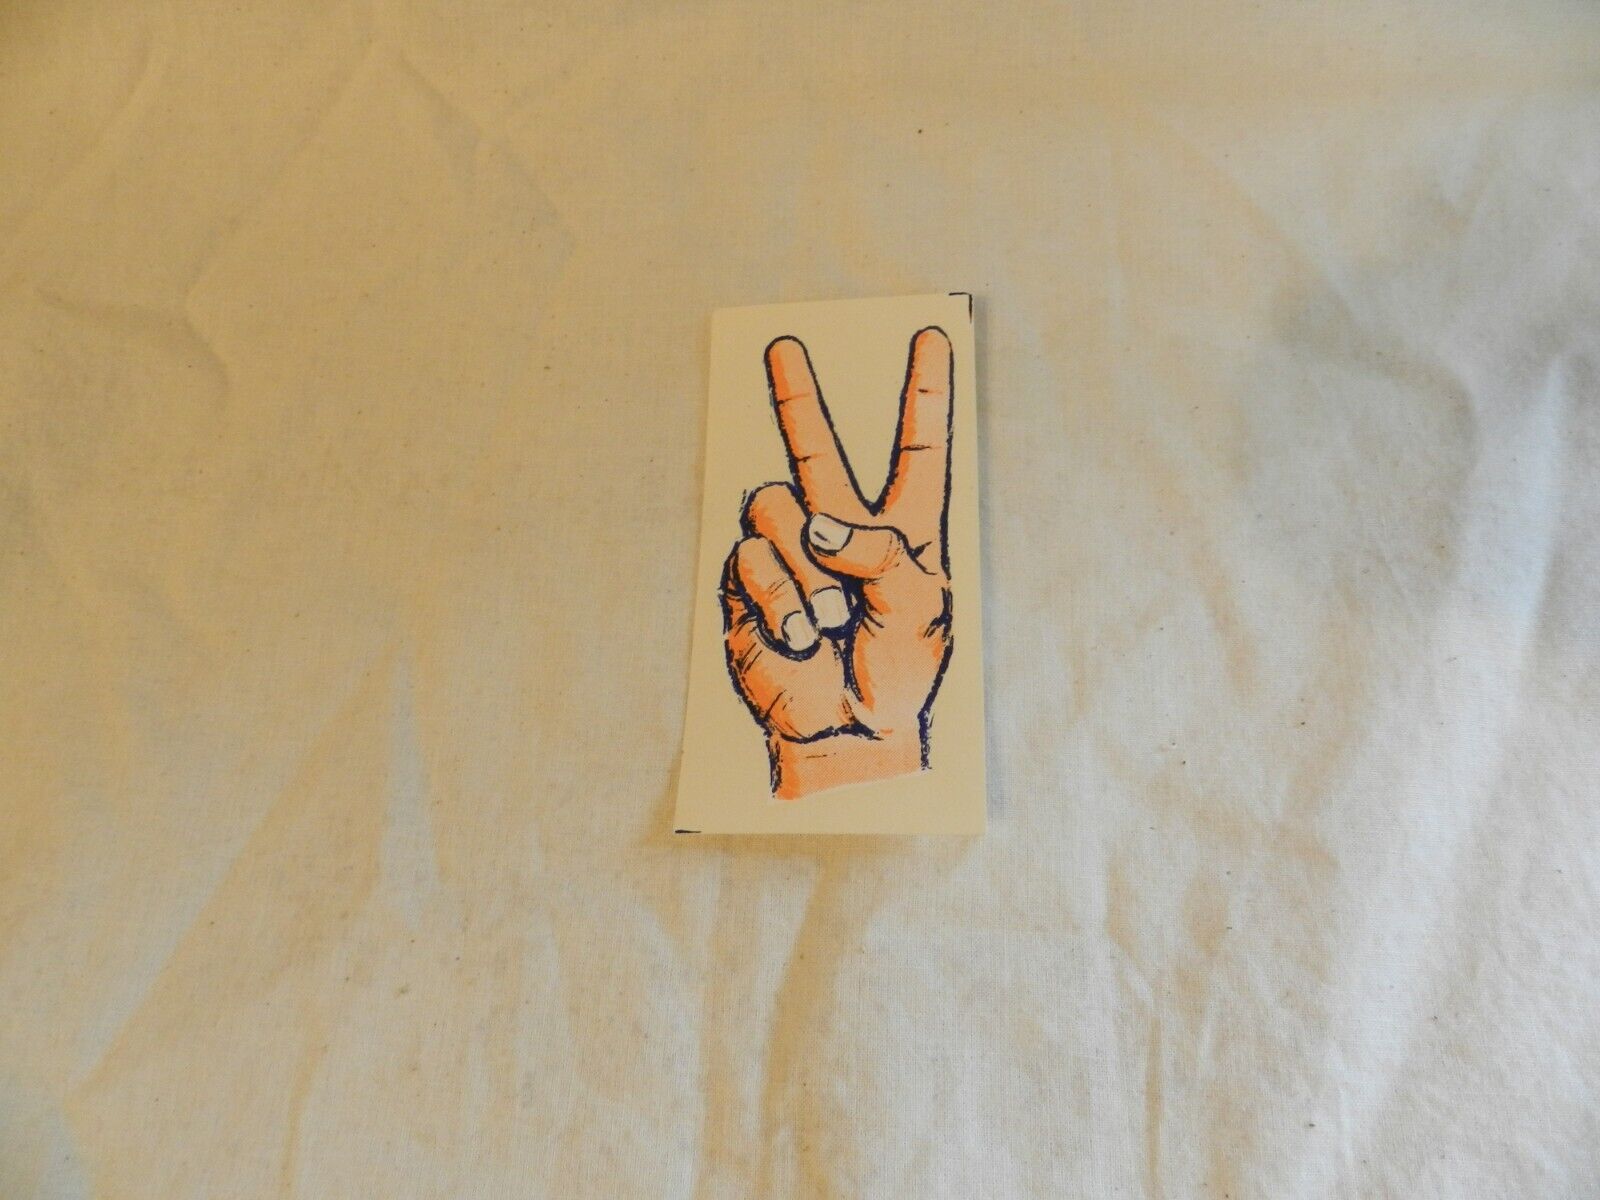 Vintage Hippie decal/sticker peace sign